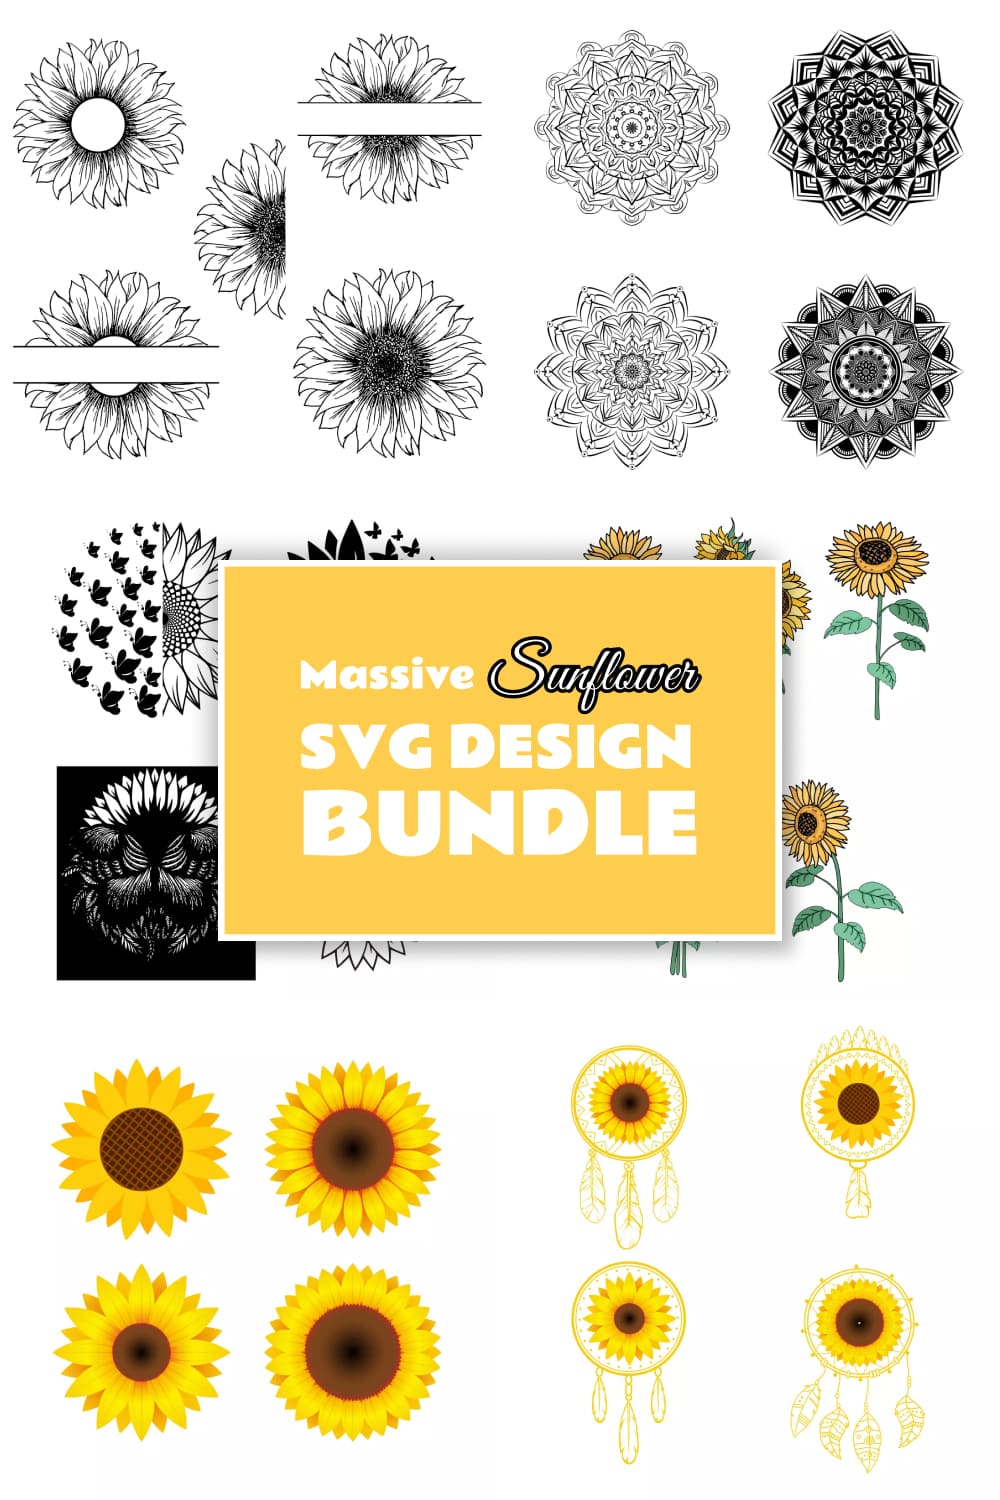 Massive Sunflower SVG Designs Bundle - pinterest image preview.